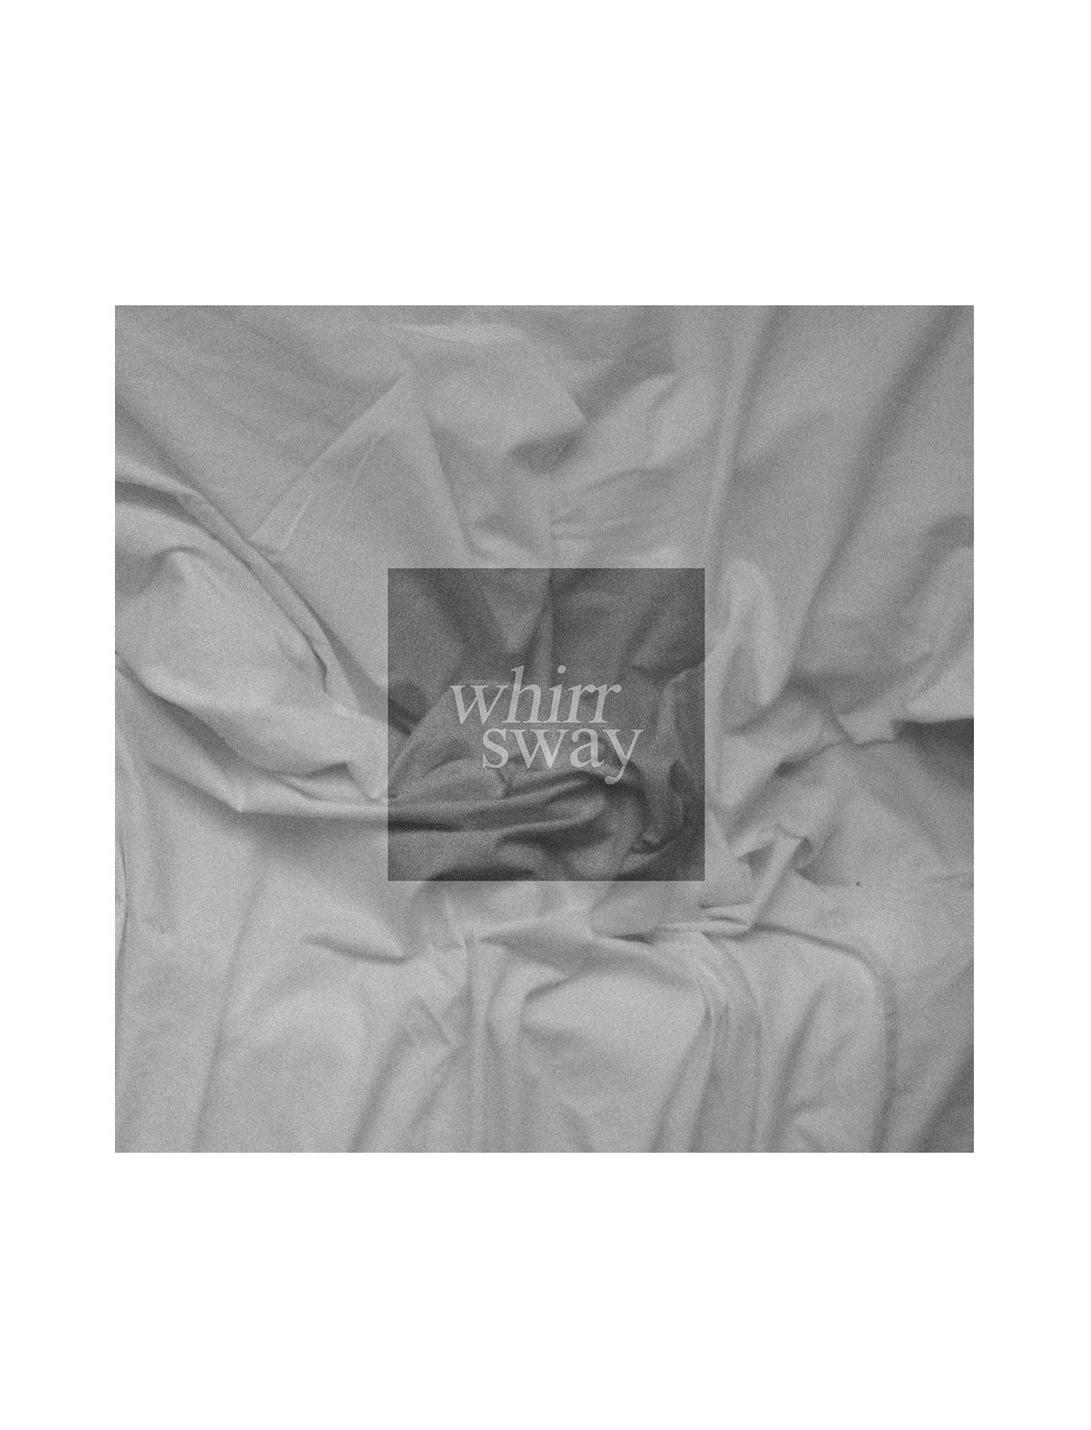 Whirr - Sway Vinyl LP, , hi-res